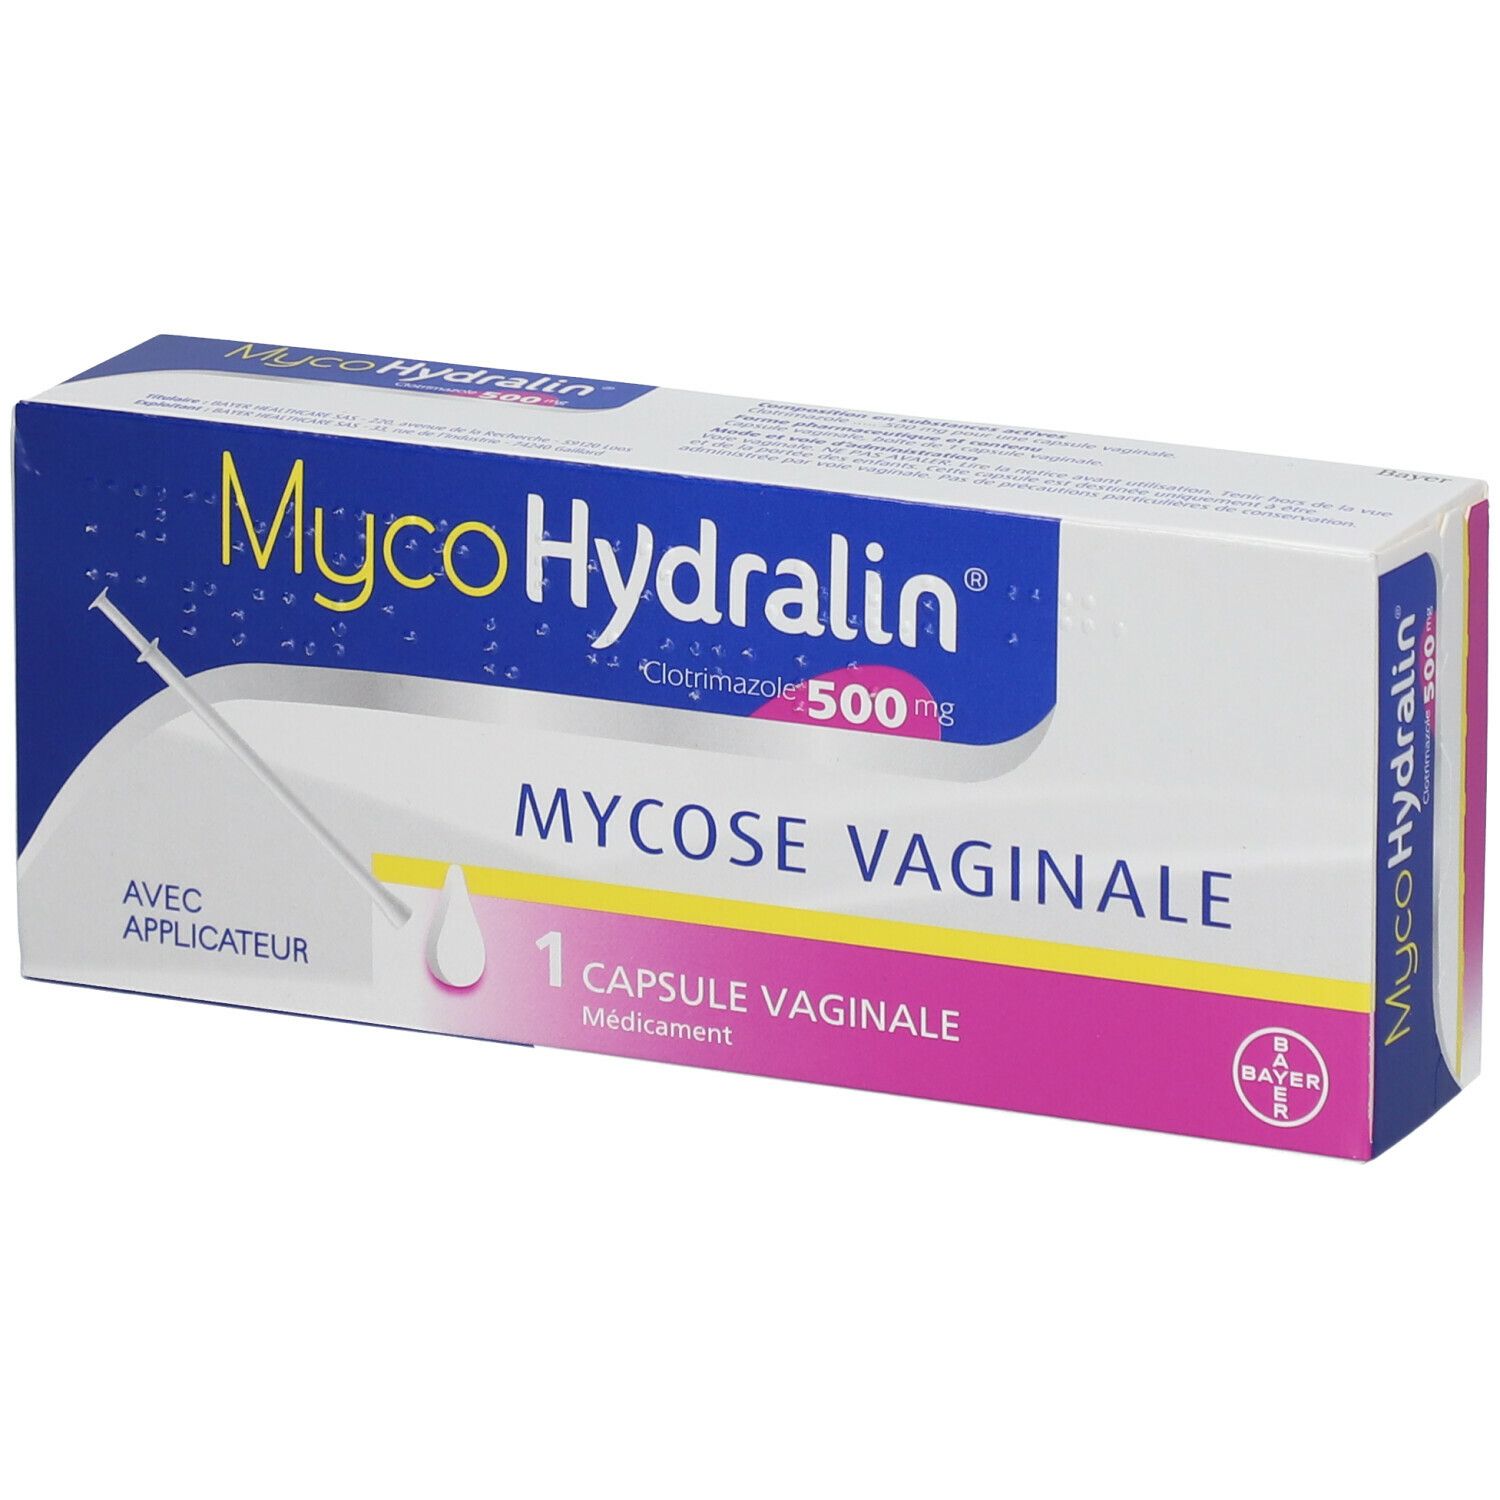 MycoHydralin® Clotrimazol 500 mg 1 pc(s) - Redcare Pharmacie